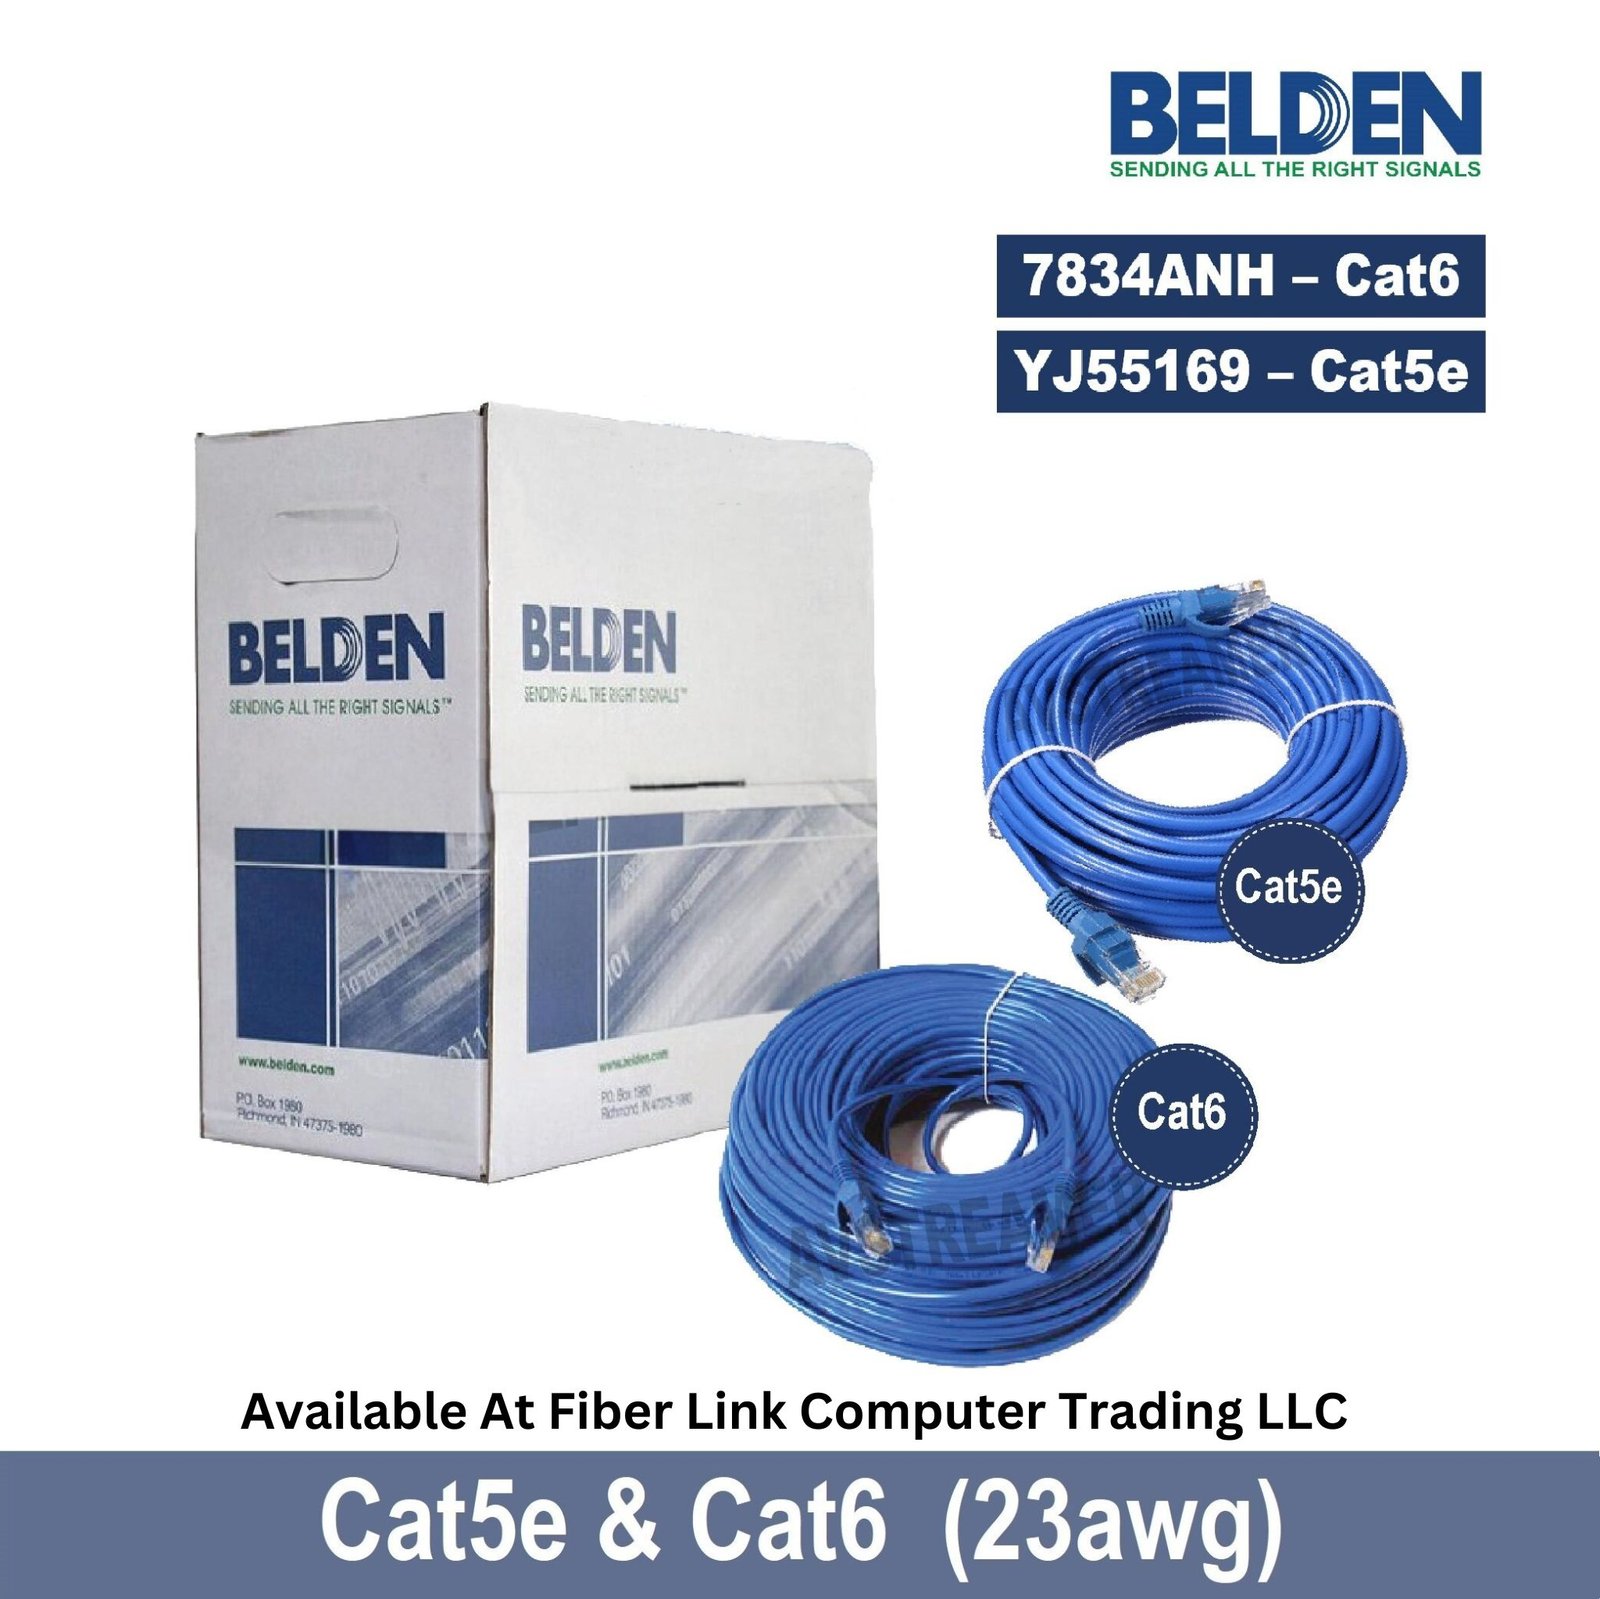 Top Belden CAT6 Cable Supplier in Dubai – Fiber Link Computer Trading LLC